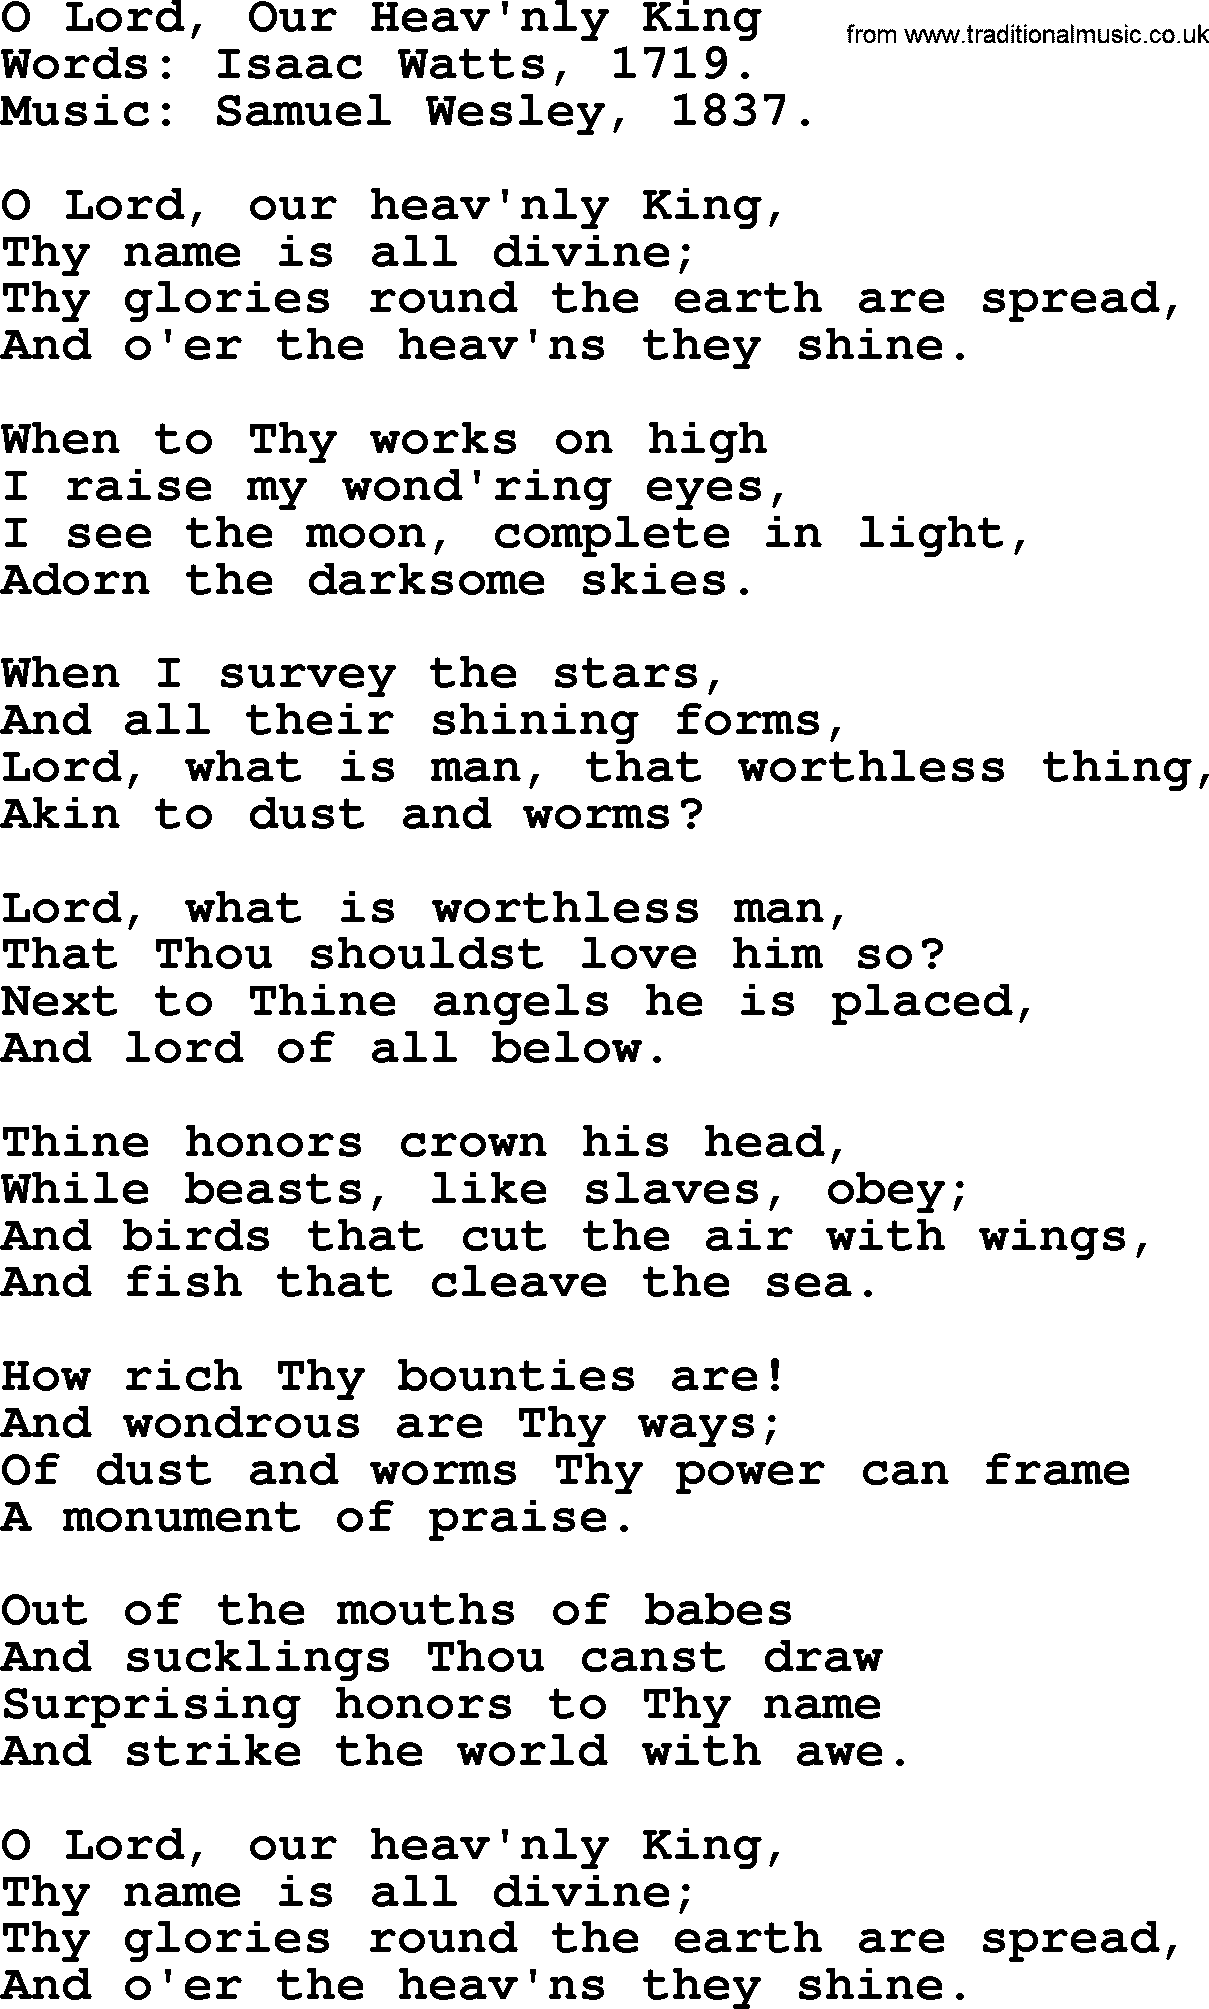 Isaac Watts Christian hymn: O Lord, Our Heav'nly King- lyricss